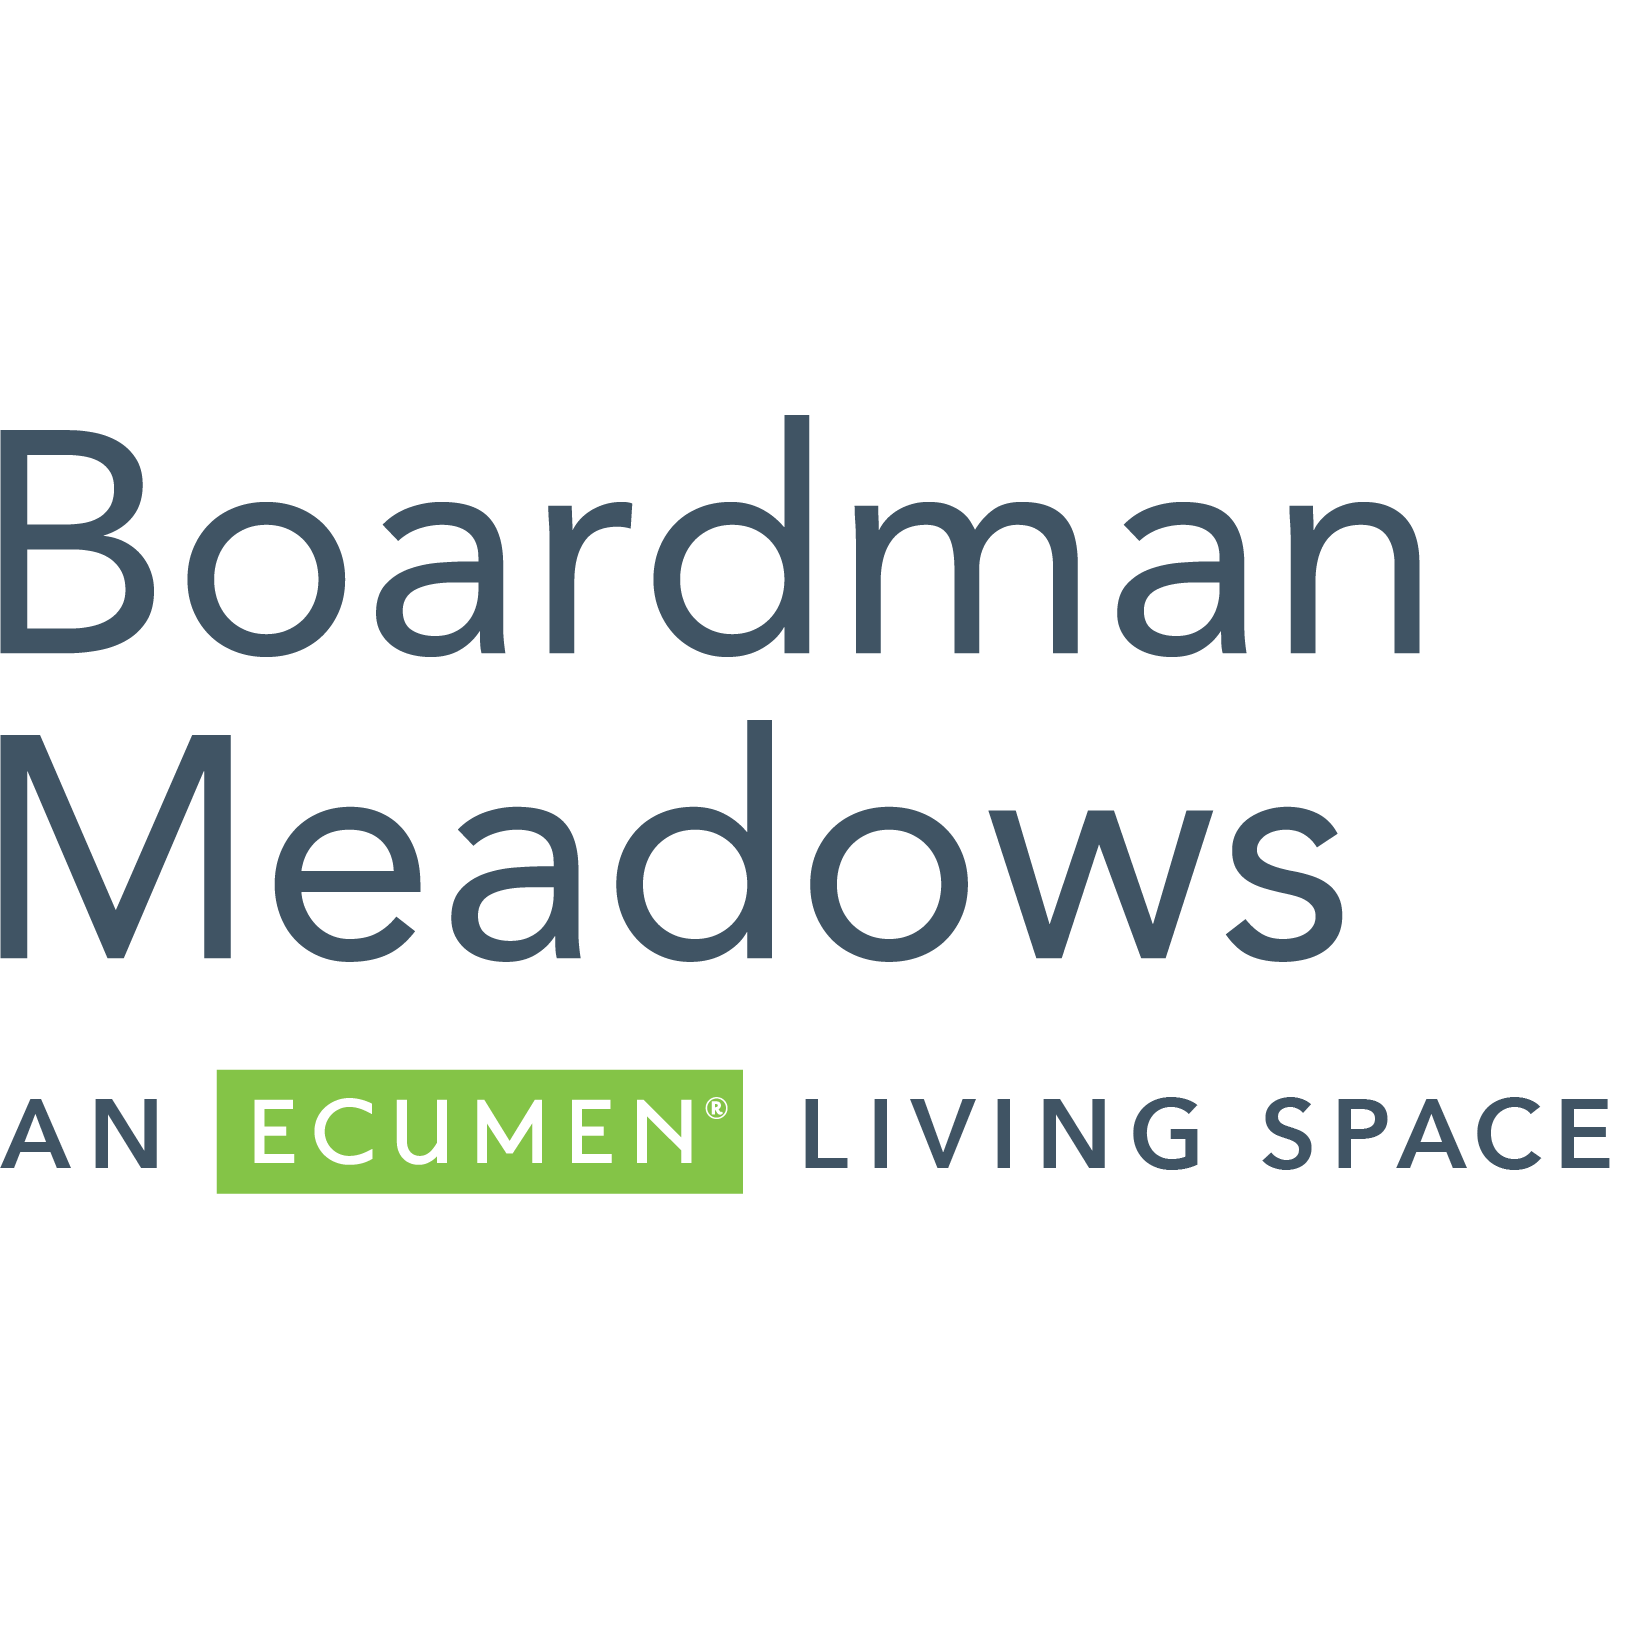 Boardman Meadows | An Ecumen Living Space - New Richmond, WI 54017 - (715)246-5510 | ShowMeLocal.com